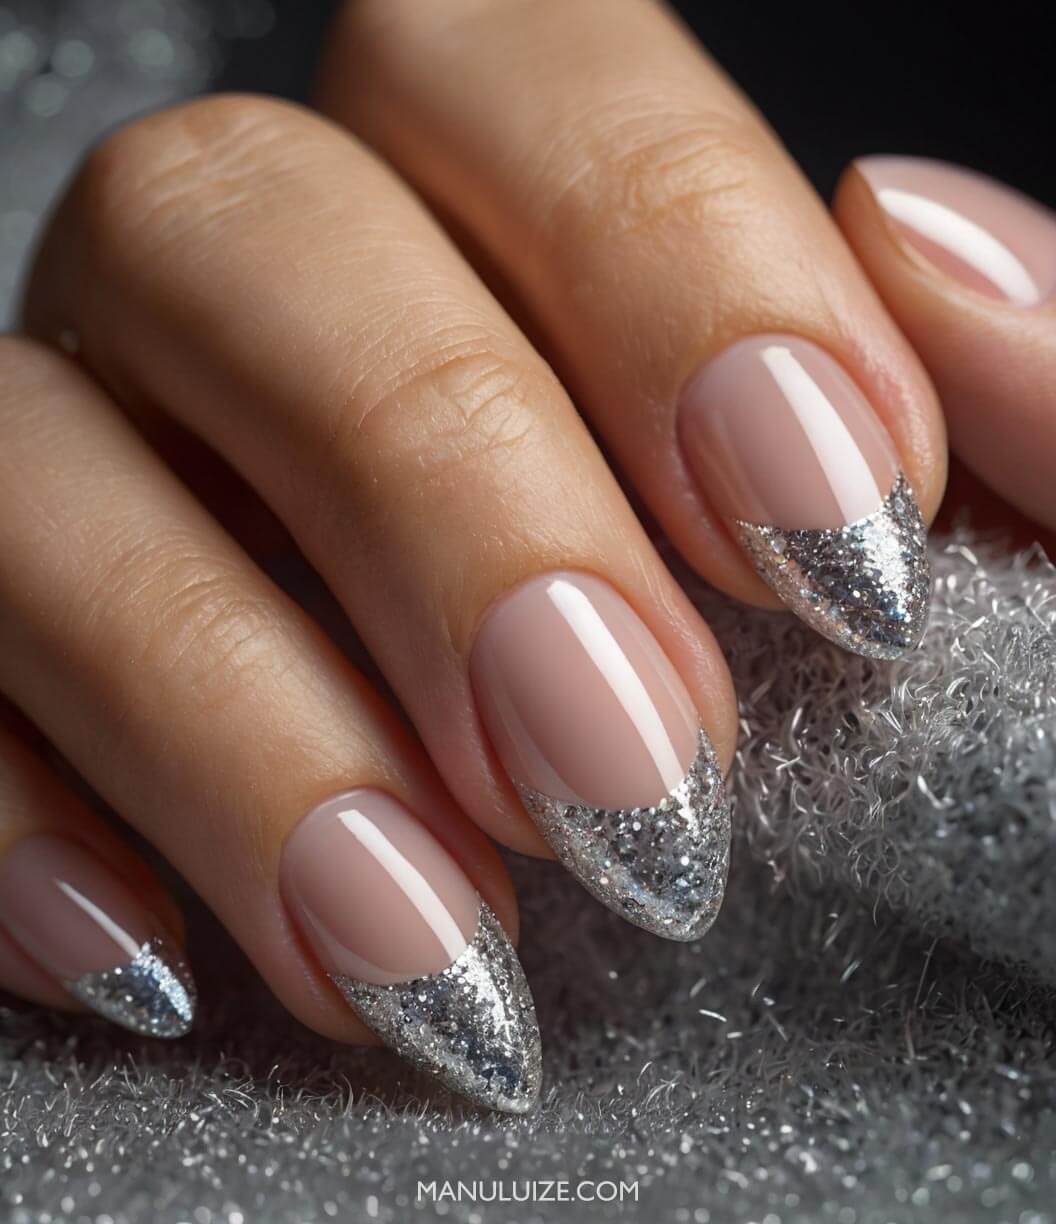 Silver glitter in french manicure